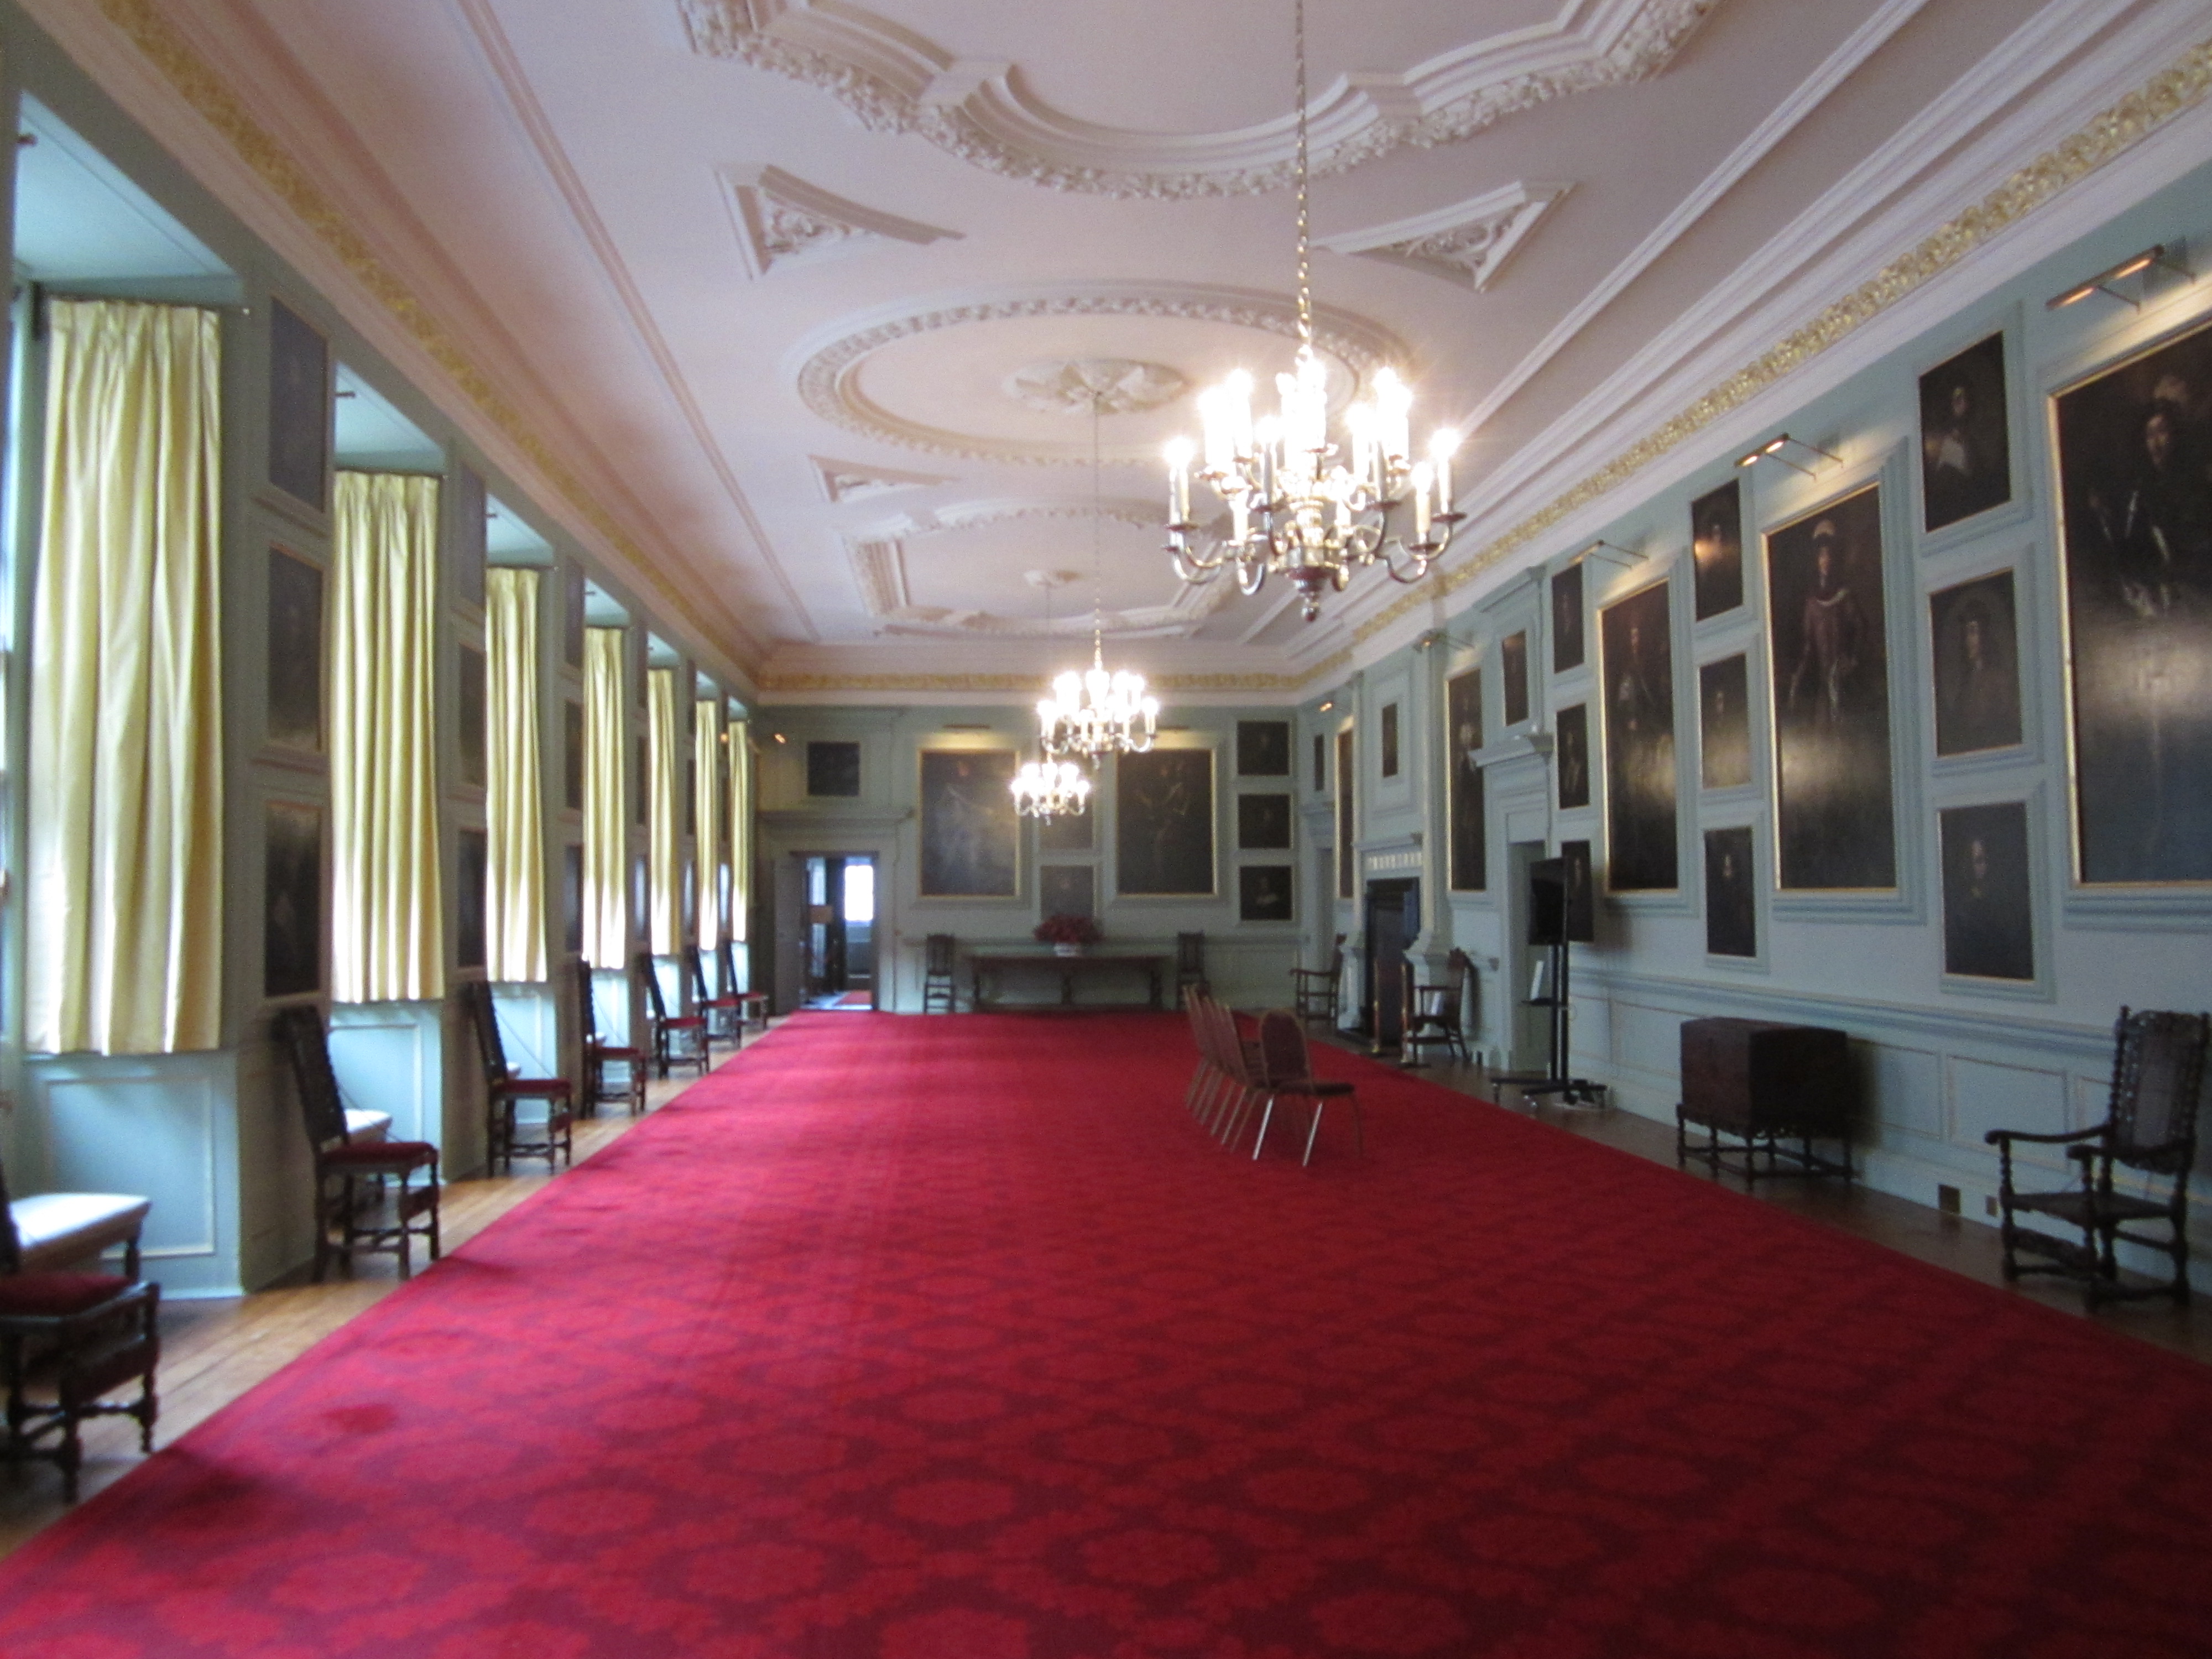 Greats gallery. Дворец Холирудхаус внутри. Холирудский дворец Шотландия внутри. Замок Балморал бальный зал. Холирудский дворец Эдинбург интерьеры.